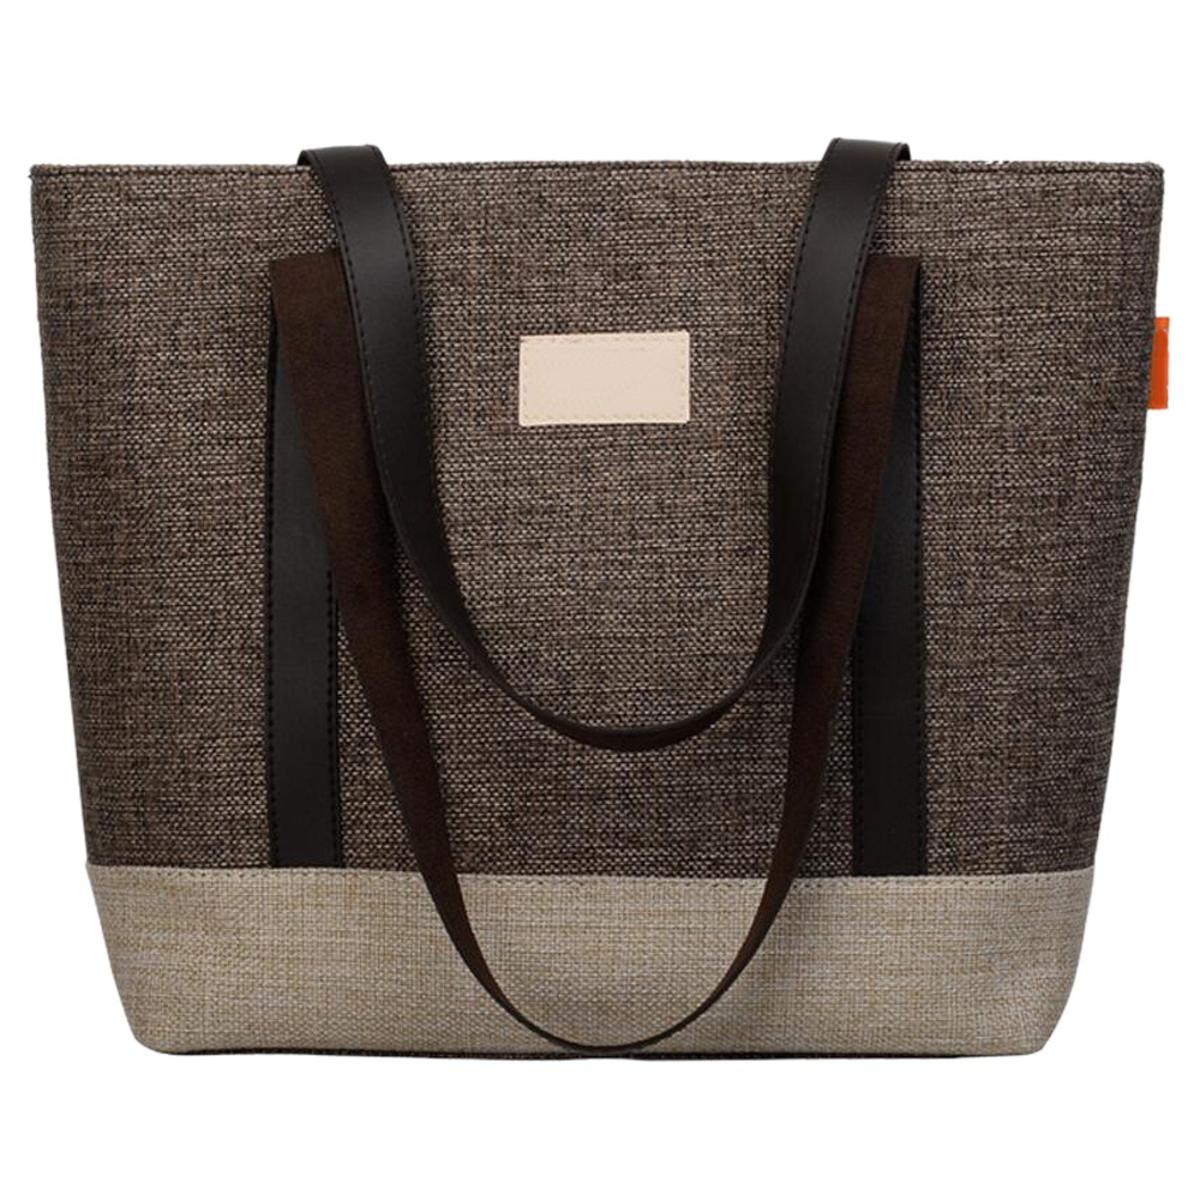 Gray Purse | Grey purses, Purses, Bags